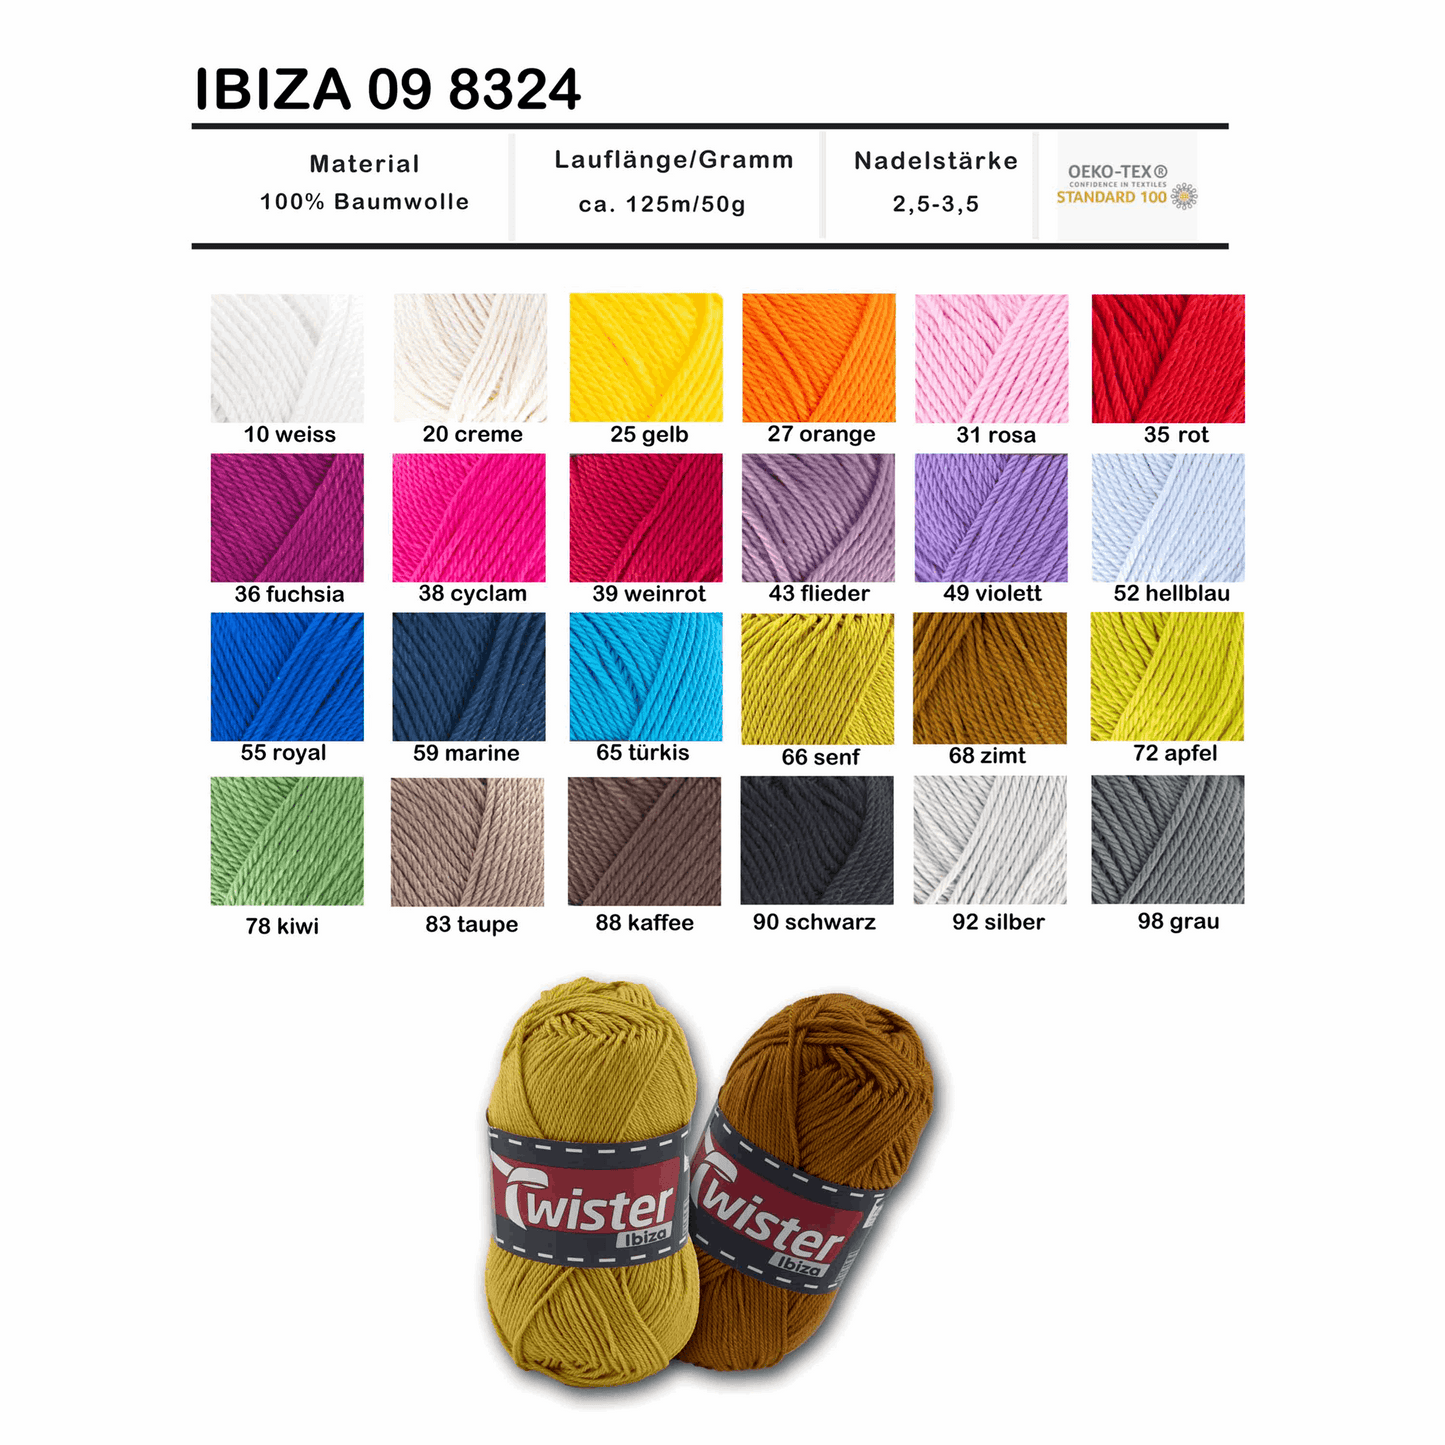 Twister Ibiza, 50g, 98324, color mustard 66